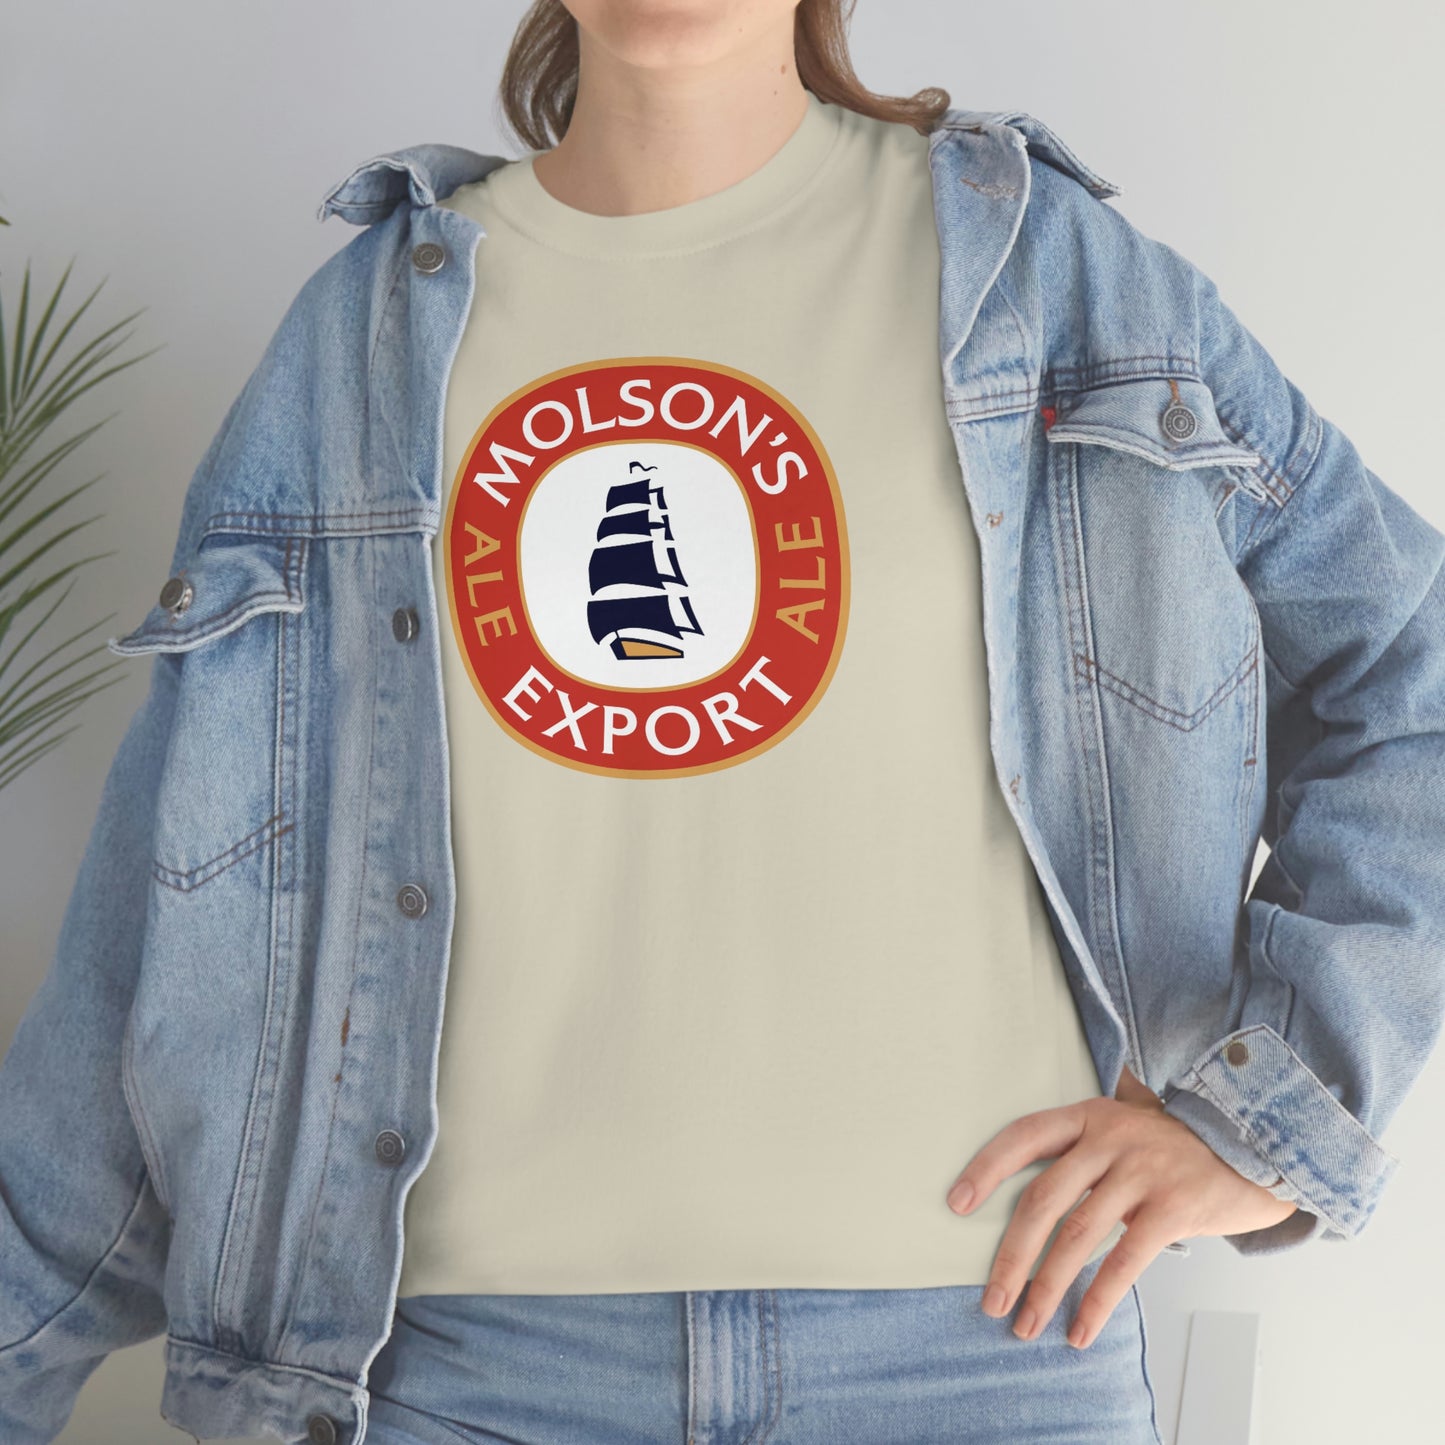 Molson Export T-Shirt